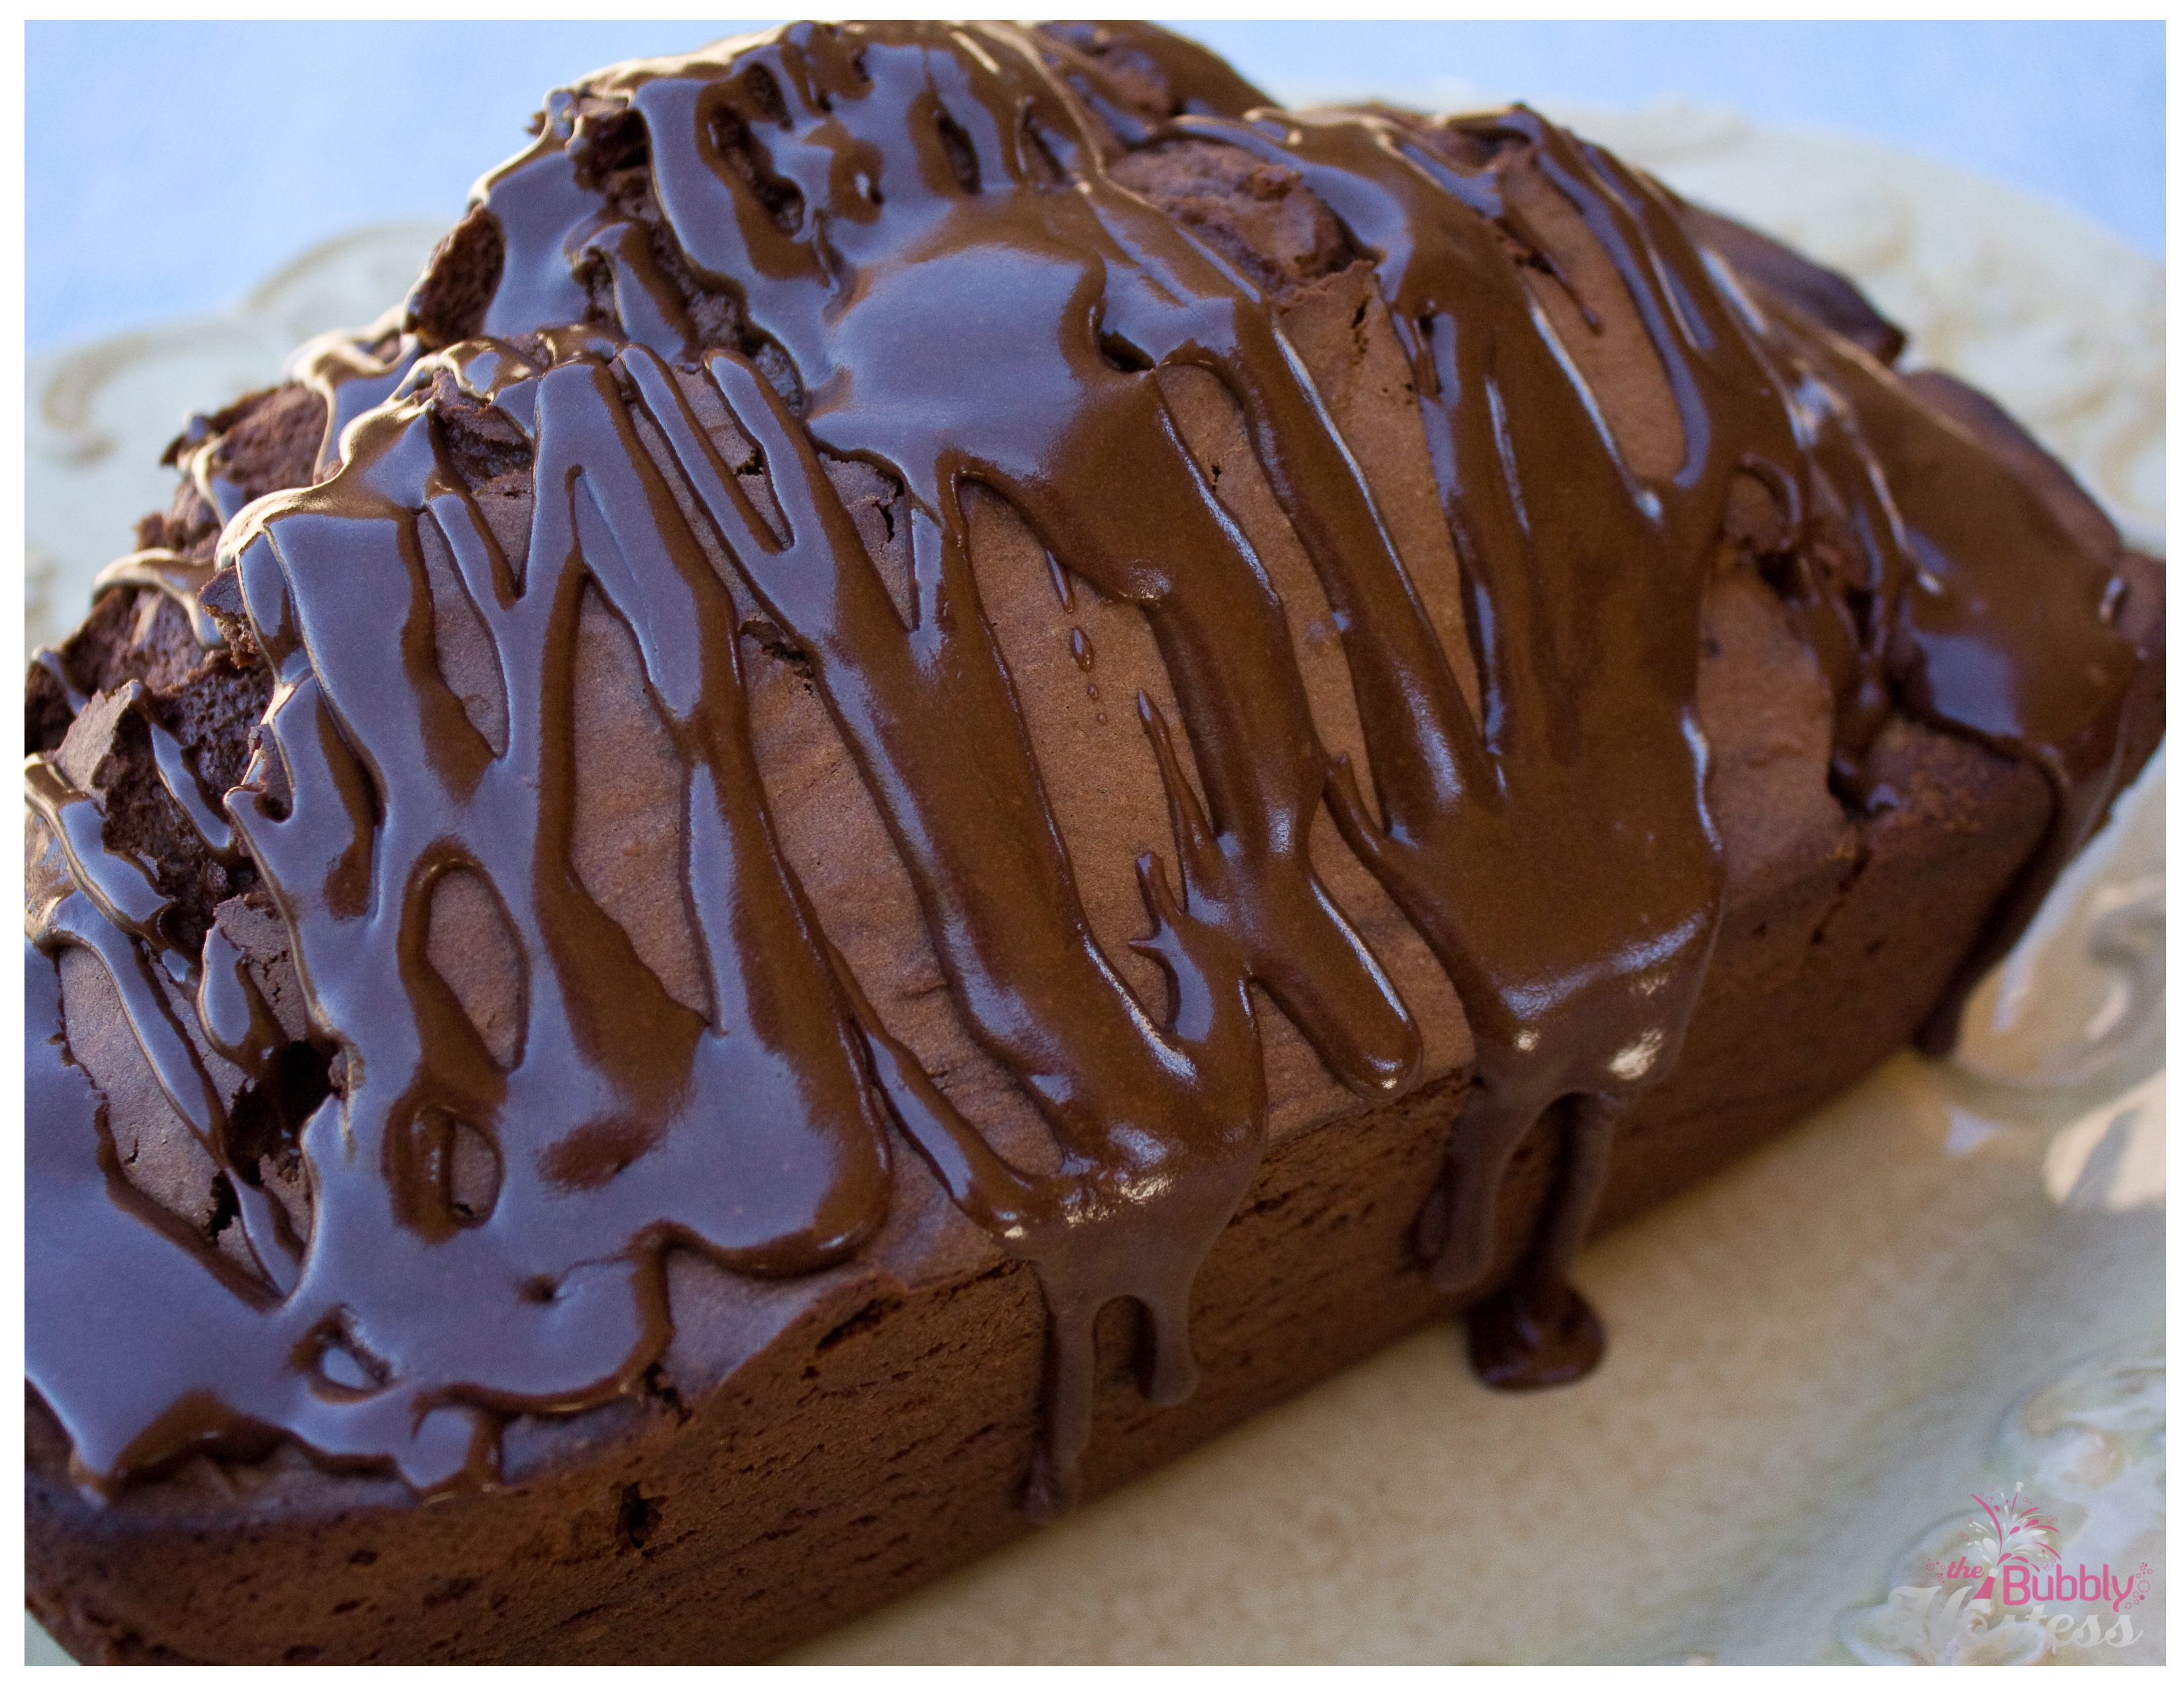 Chocolate Mascarpone Pound Cake Watermark from Giada De Laurentiis | The Bubbly Hostess